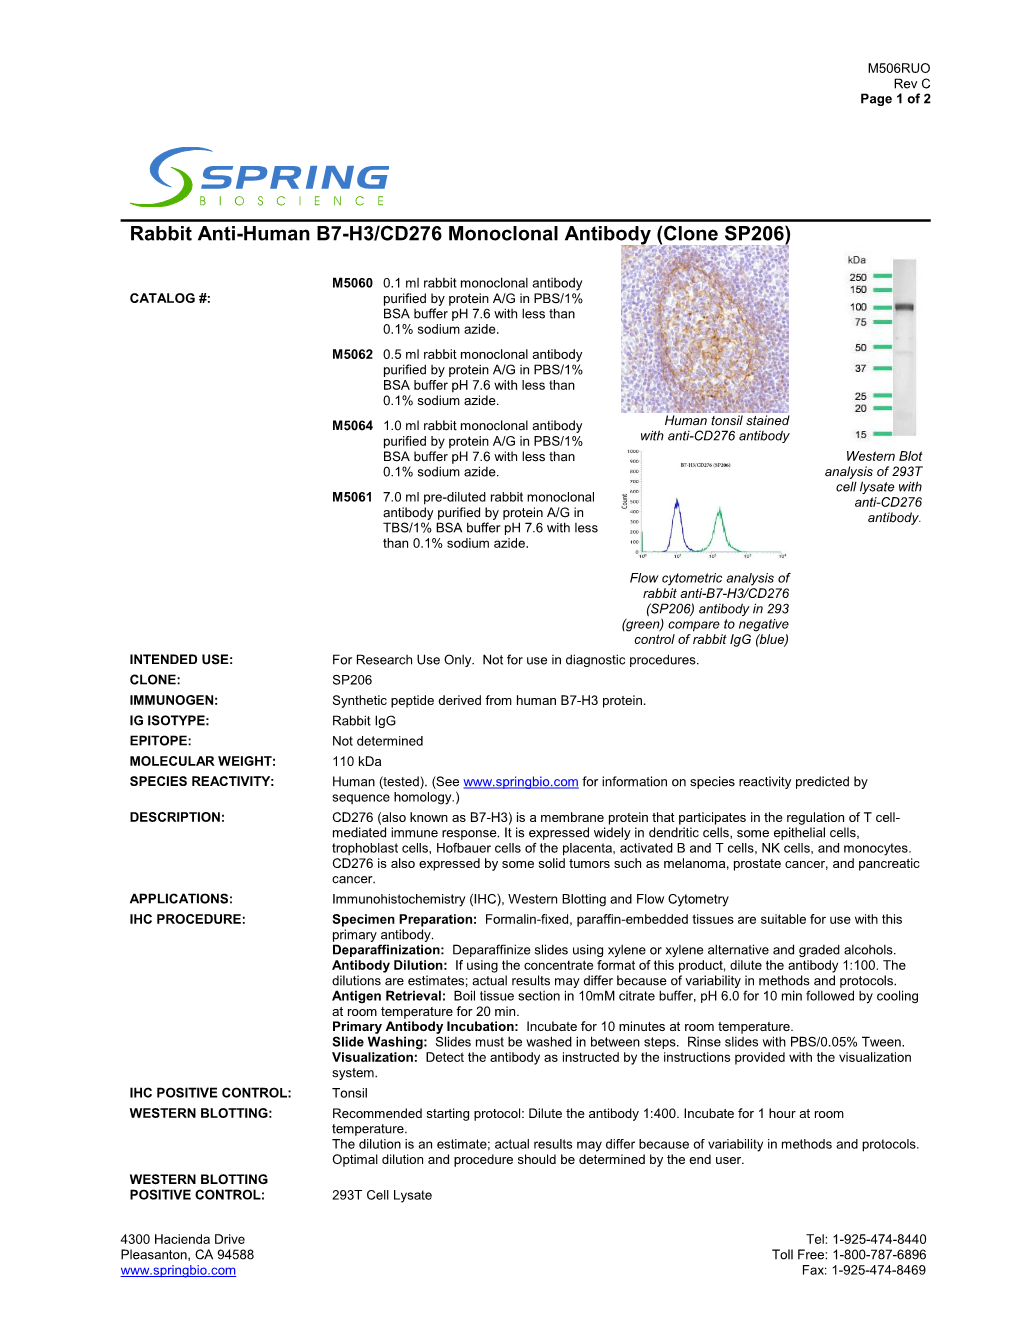 Rabbit Anti-Human B7-H3/CD276 Monoclonal Antibody (Clone SP206)